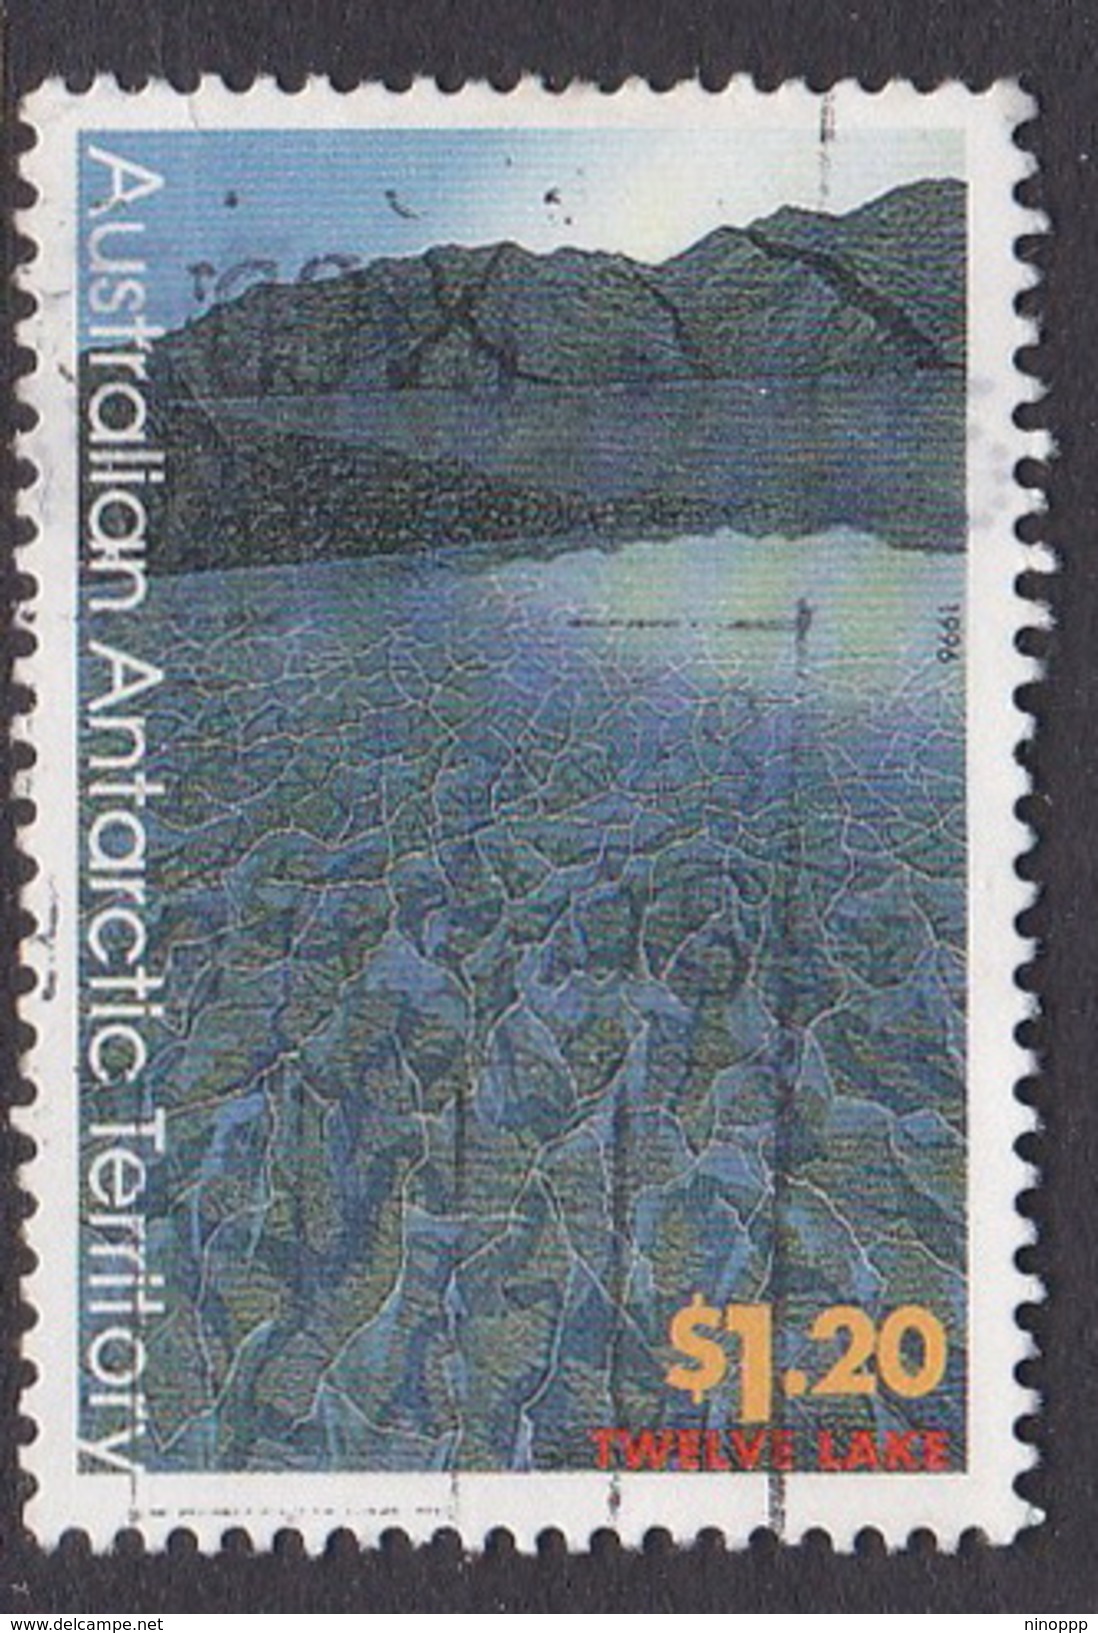 Australian Antarctic Territory  S 109 1996 Antarctic Landscapes $ 1.20 Twelve Lake Used - Gebruikt